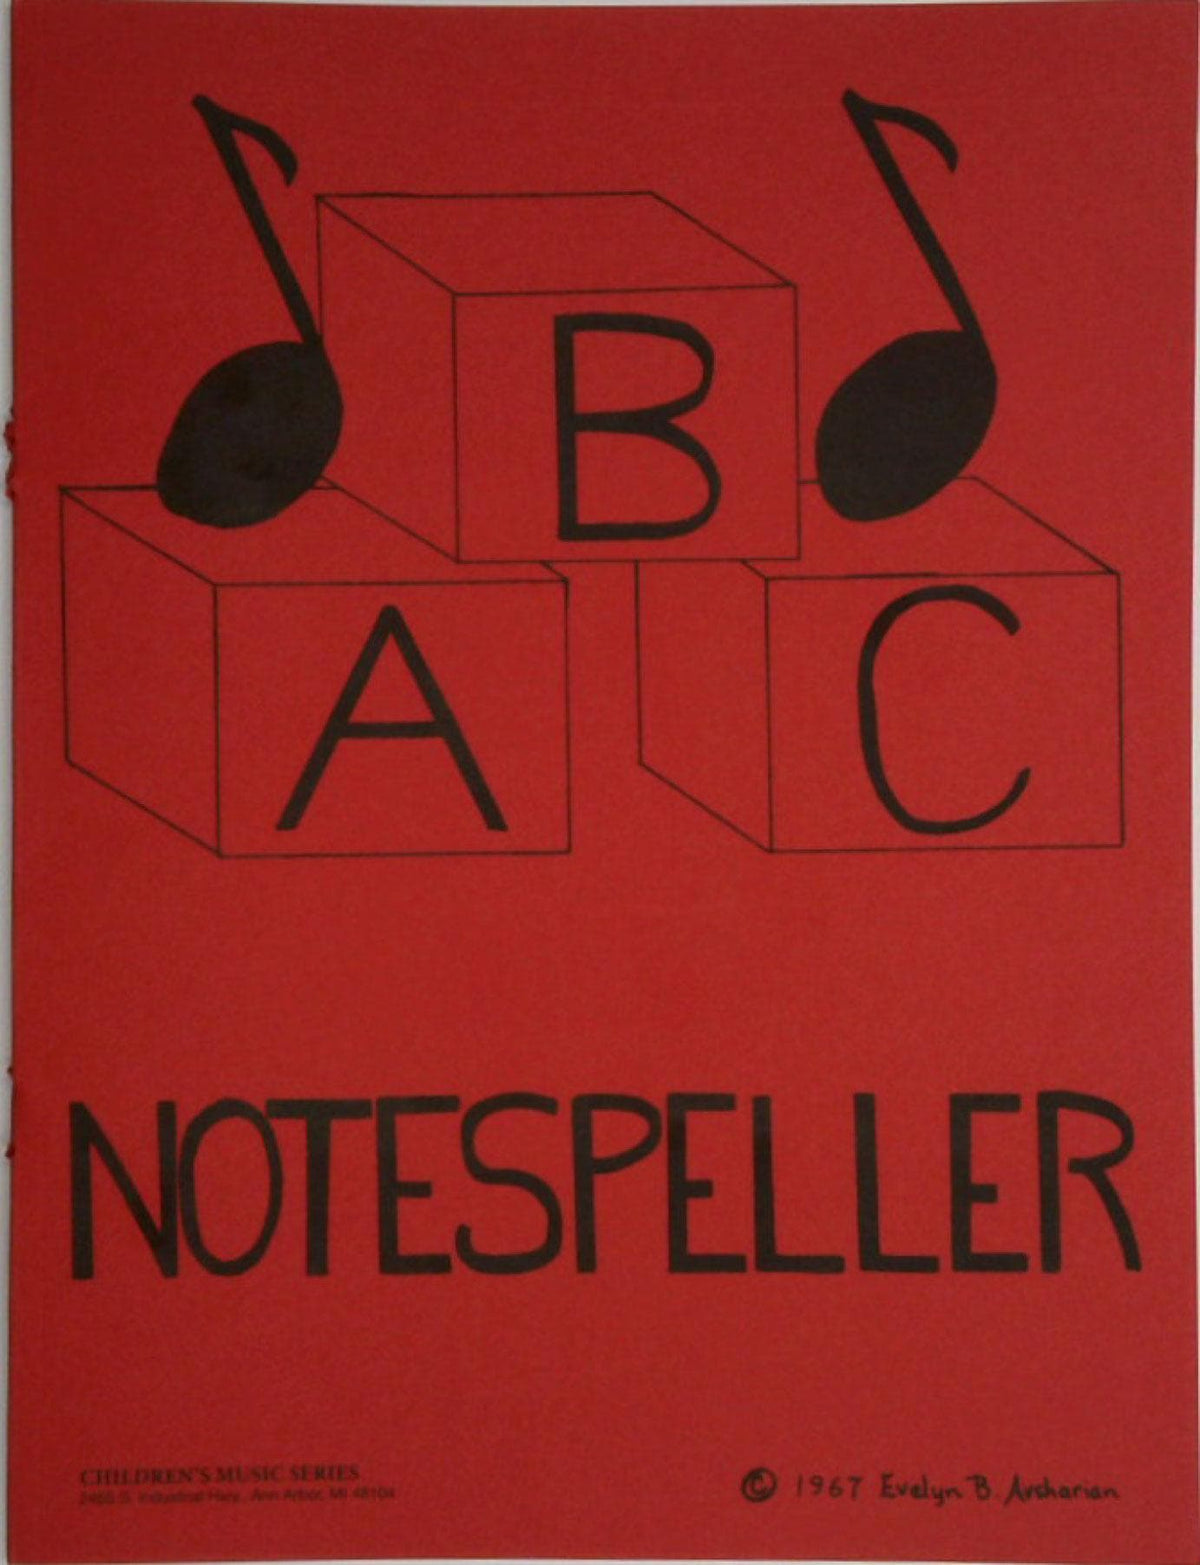 ABC Notespeller - Workbook 1 for Strings by Evelyn AvSharian - Digital Download